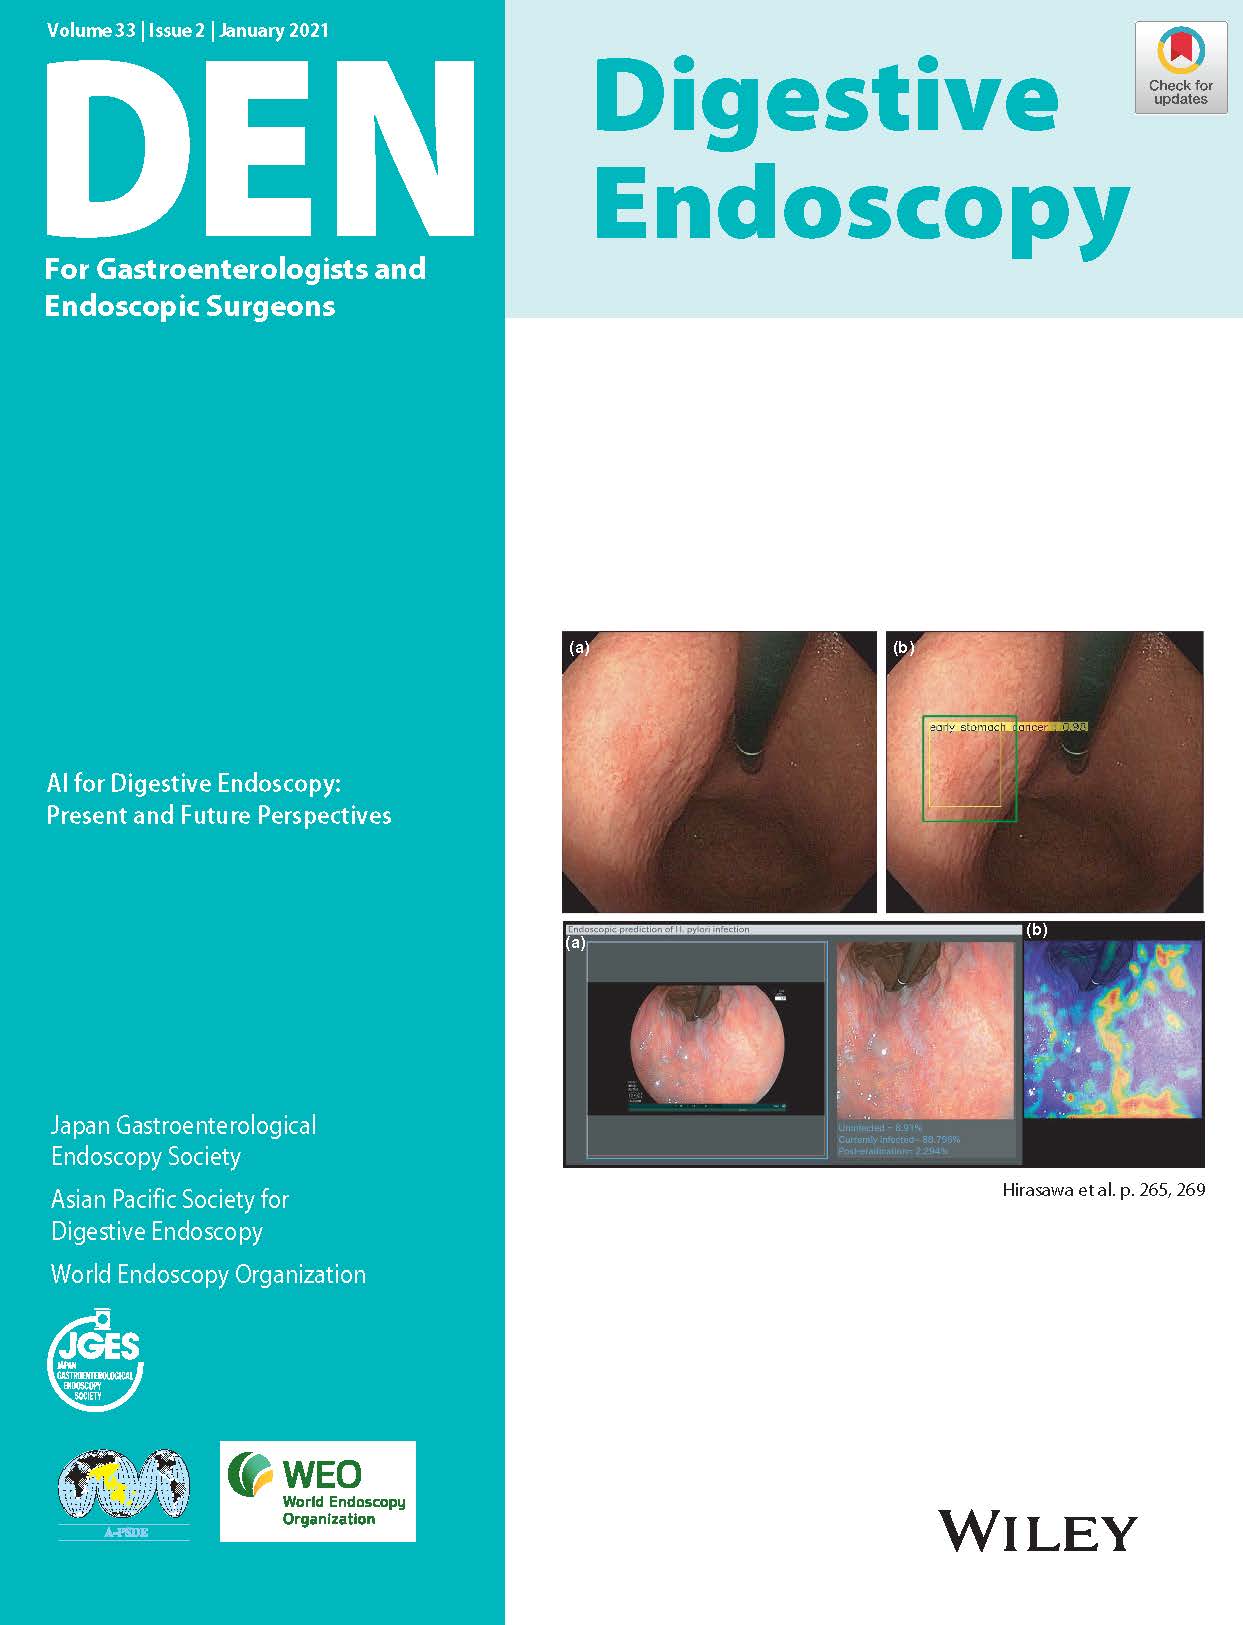 Digestive Endoscopy Vol33-2